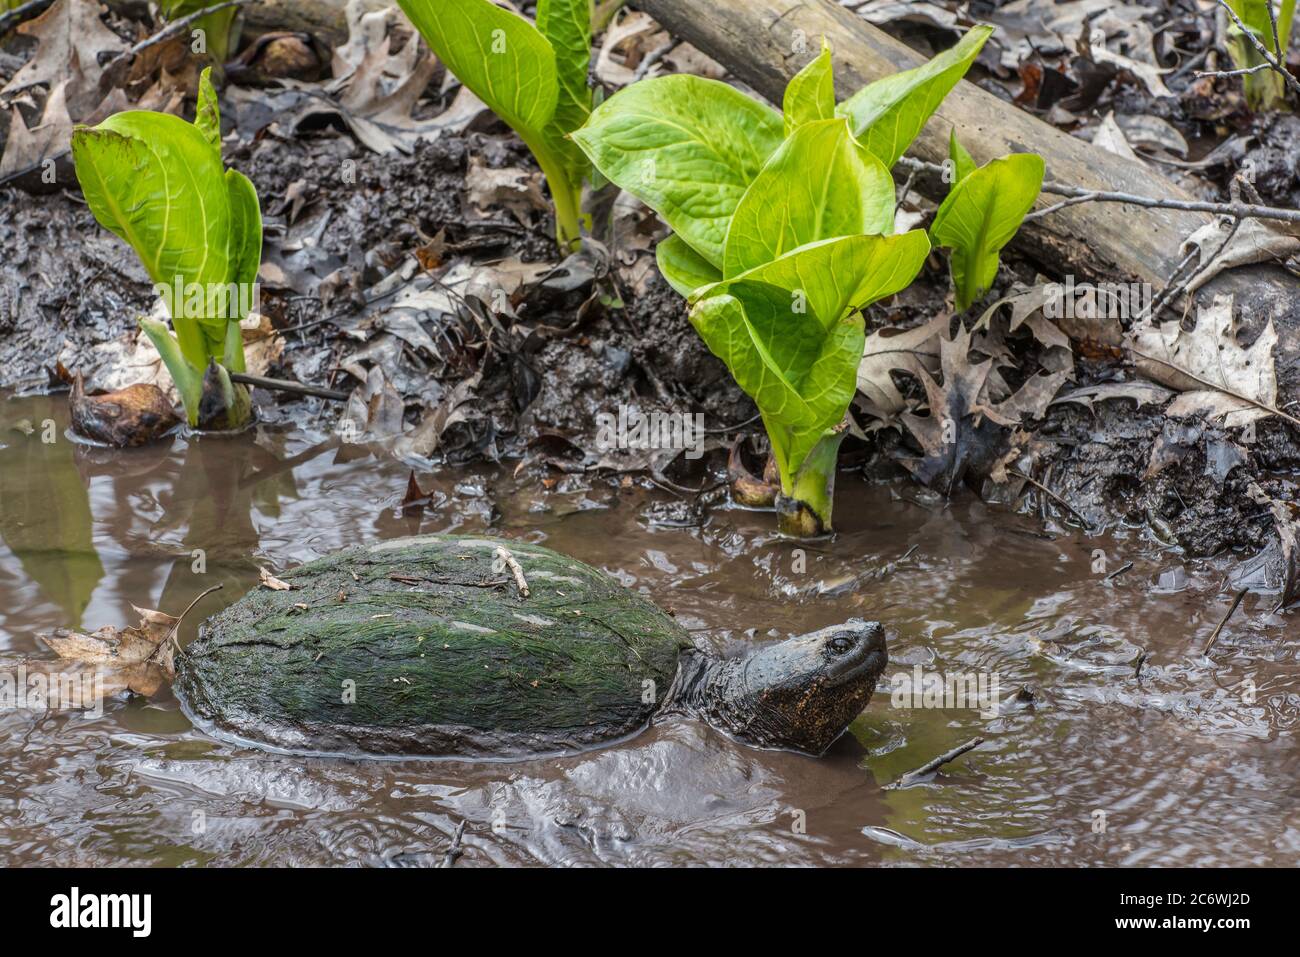 Common Snapping turtle (Chelydra serpentina) & E. Skunk Cabbage (Symplocarpus foetidus); Spring; E USA; by Bruce Montagne/Dembinsky Photo Assoc Stock Photo